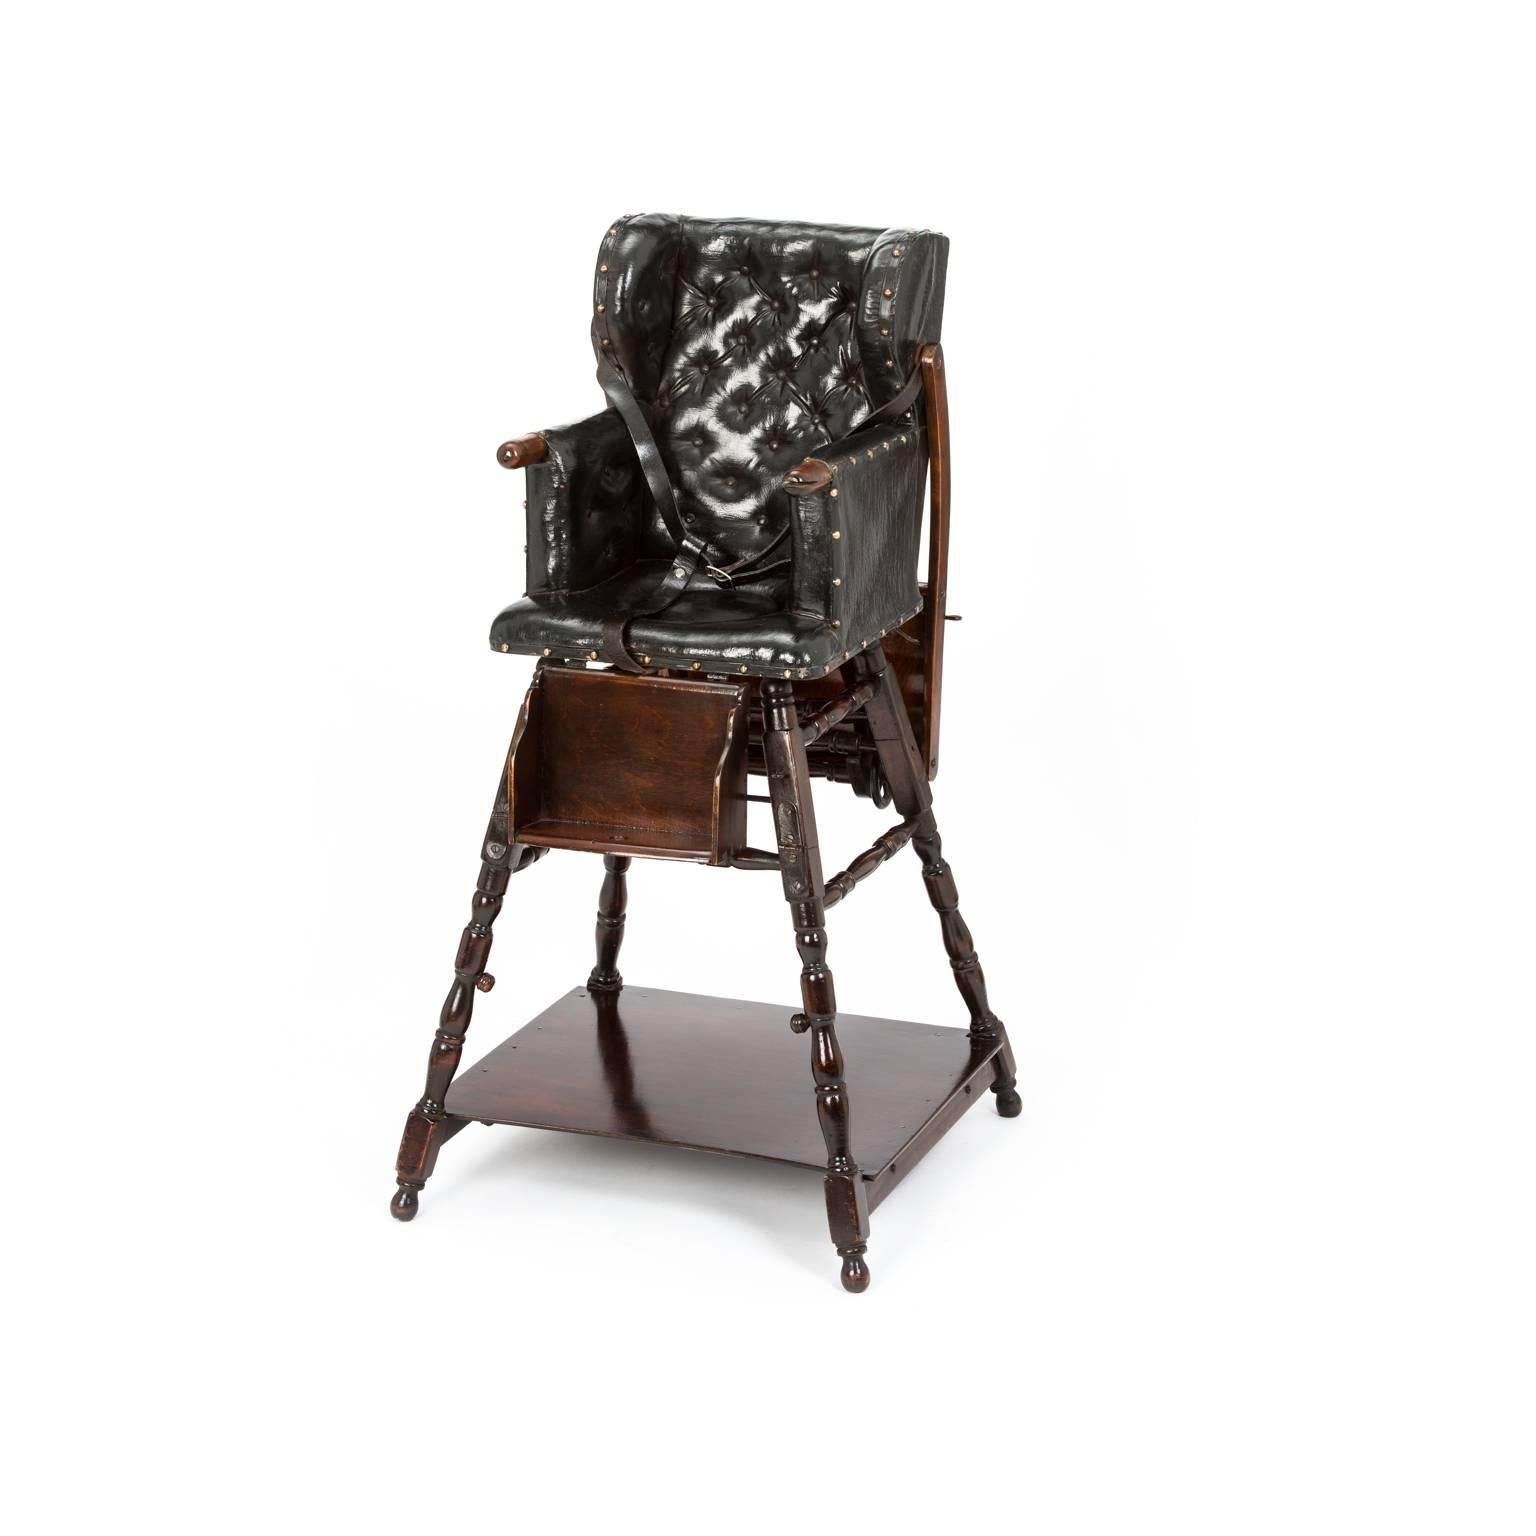 English Delightful Original Edwardian Oak Metamorphic Childs High Chair. For Sale